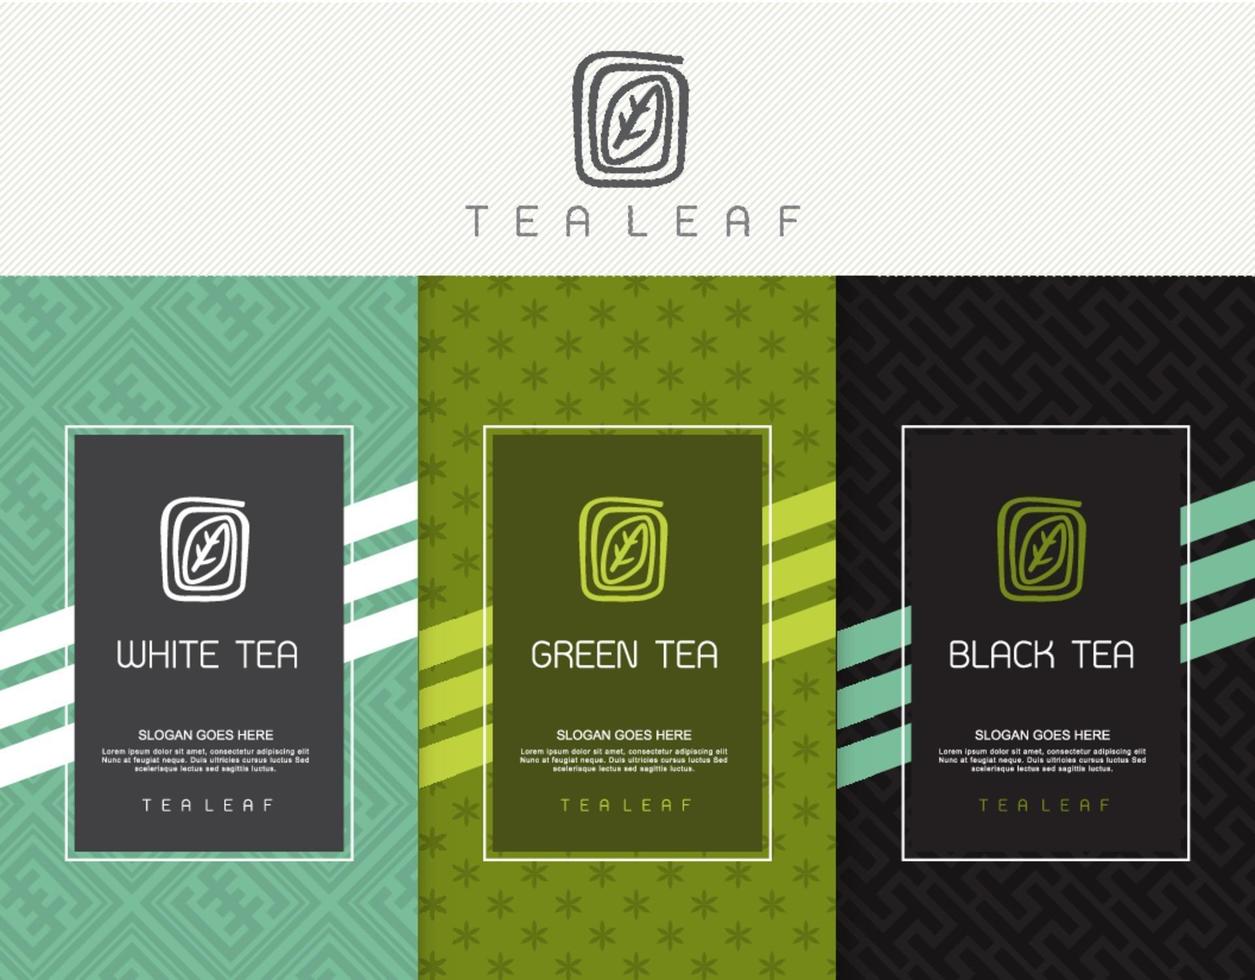 vector conjunto de plantillas de empaquetado de té, logotipo, etiqueta, pancarta, póster, identidad, marca. diseño elegante para té negro - té verde - té blanco - té oolong